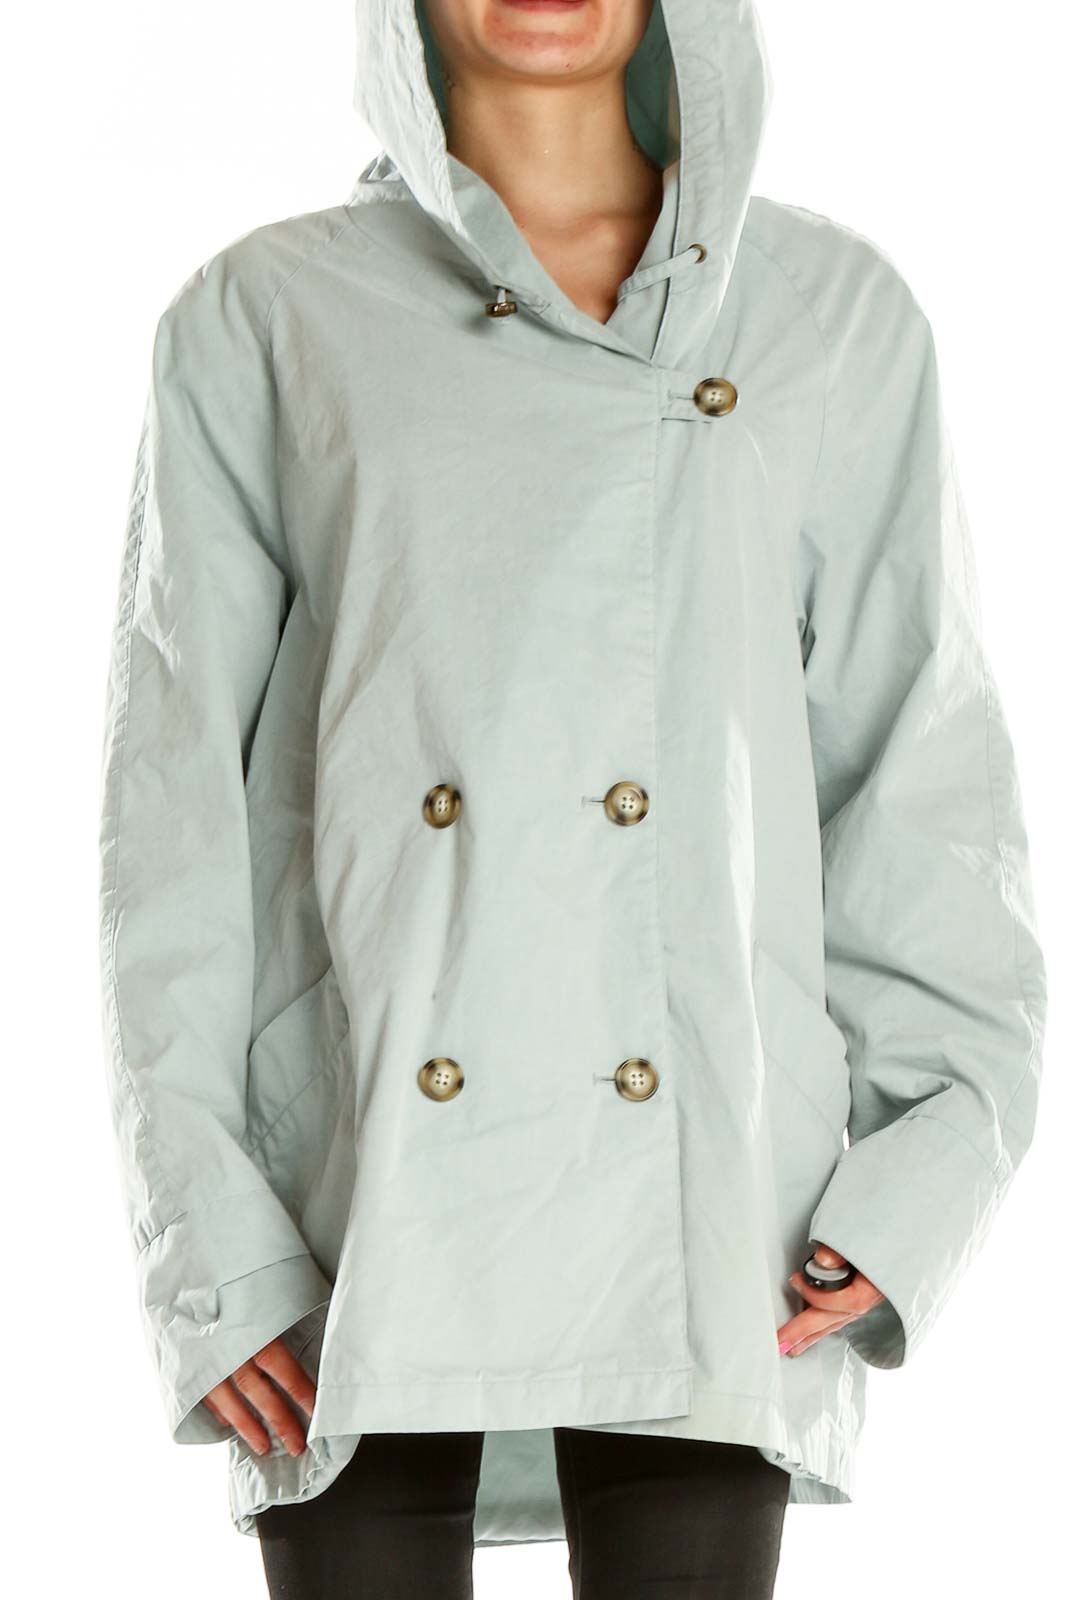 Gray Jacket Front